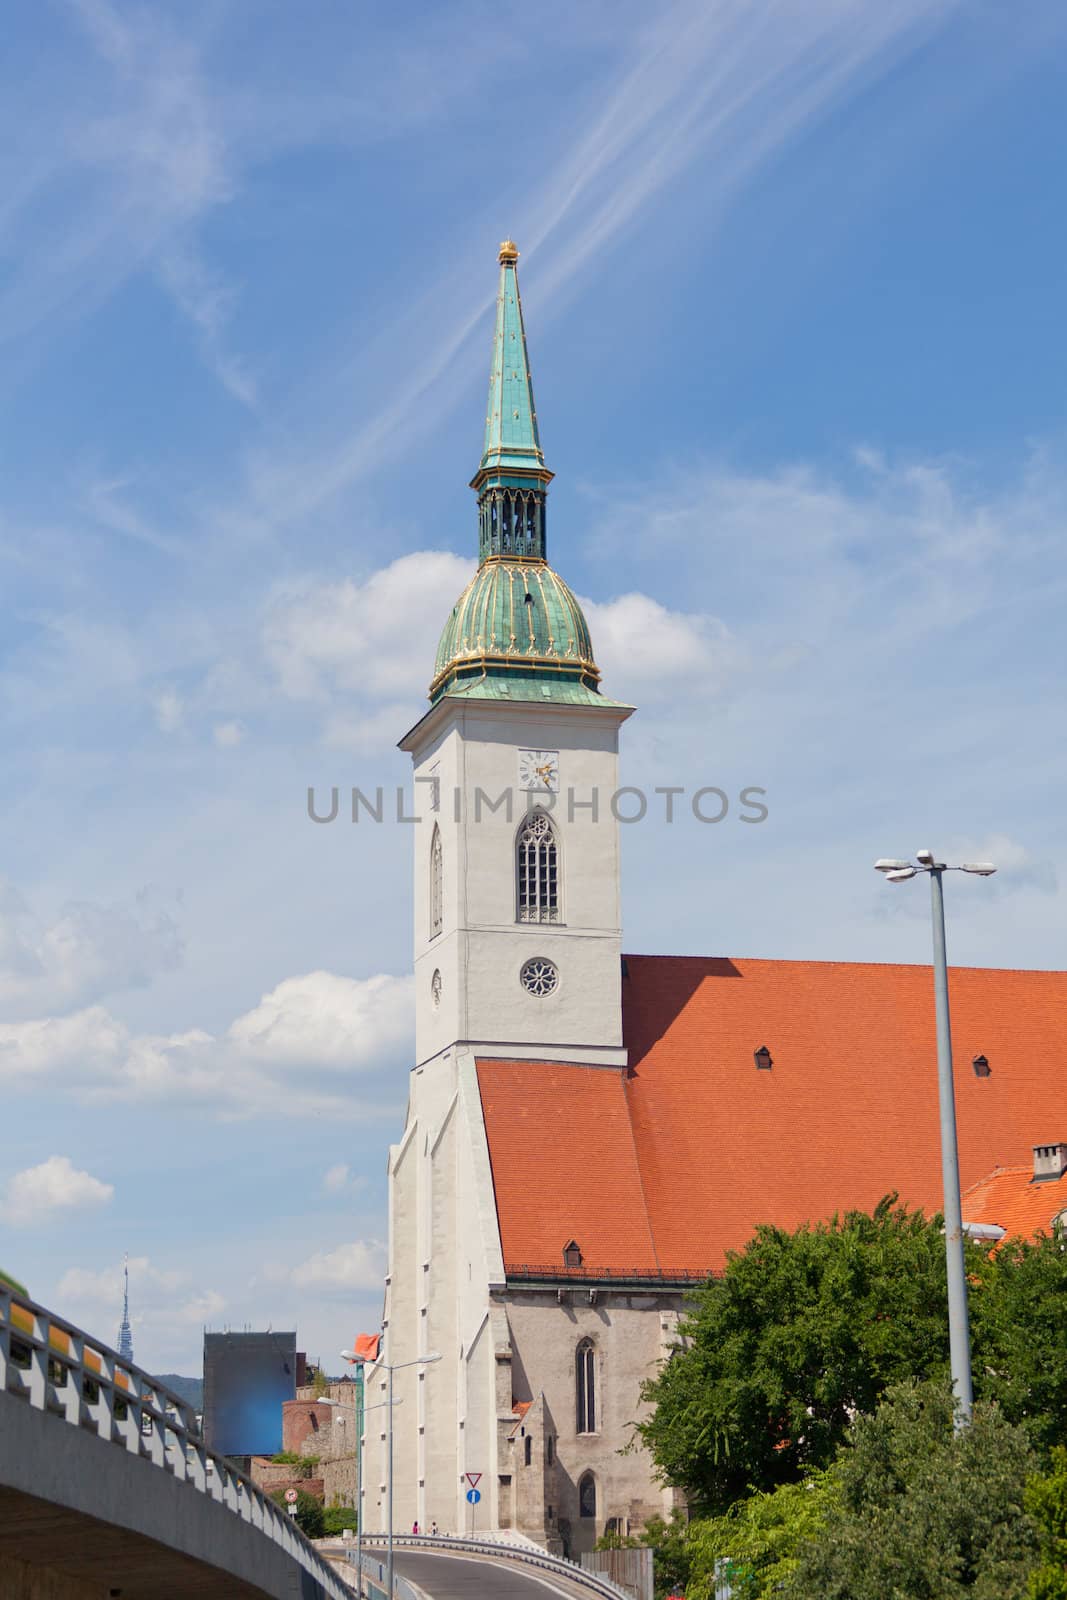 St. Martin's Catholic temple in Bratislava, Slovakia by elena_shchipkova